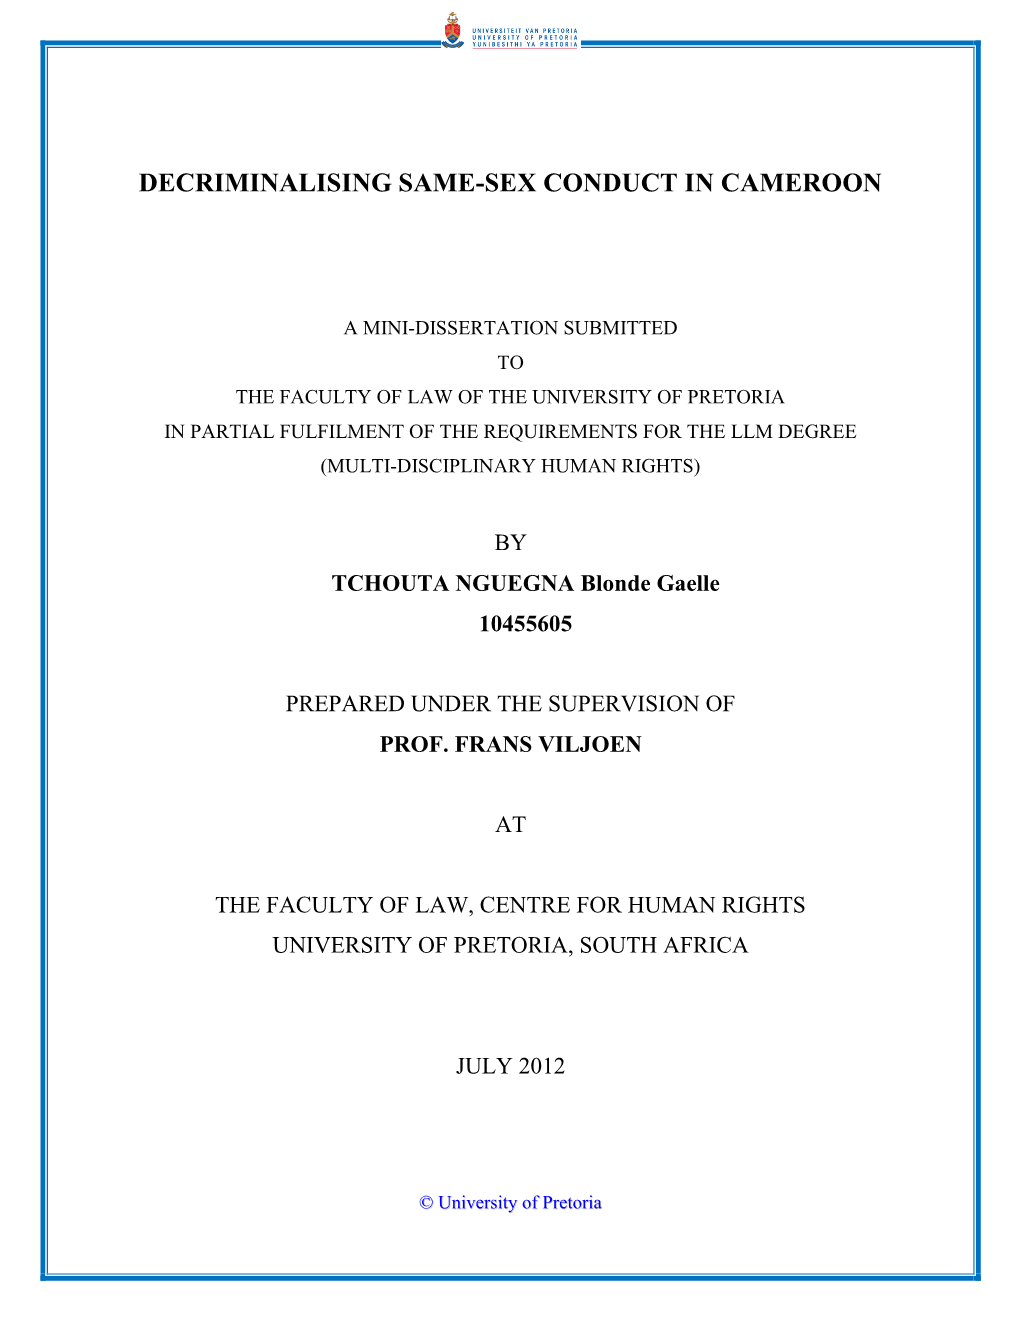 Decriminalising Same-Sex Conduct in Cameroon